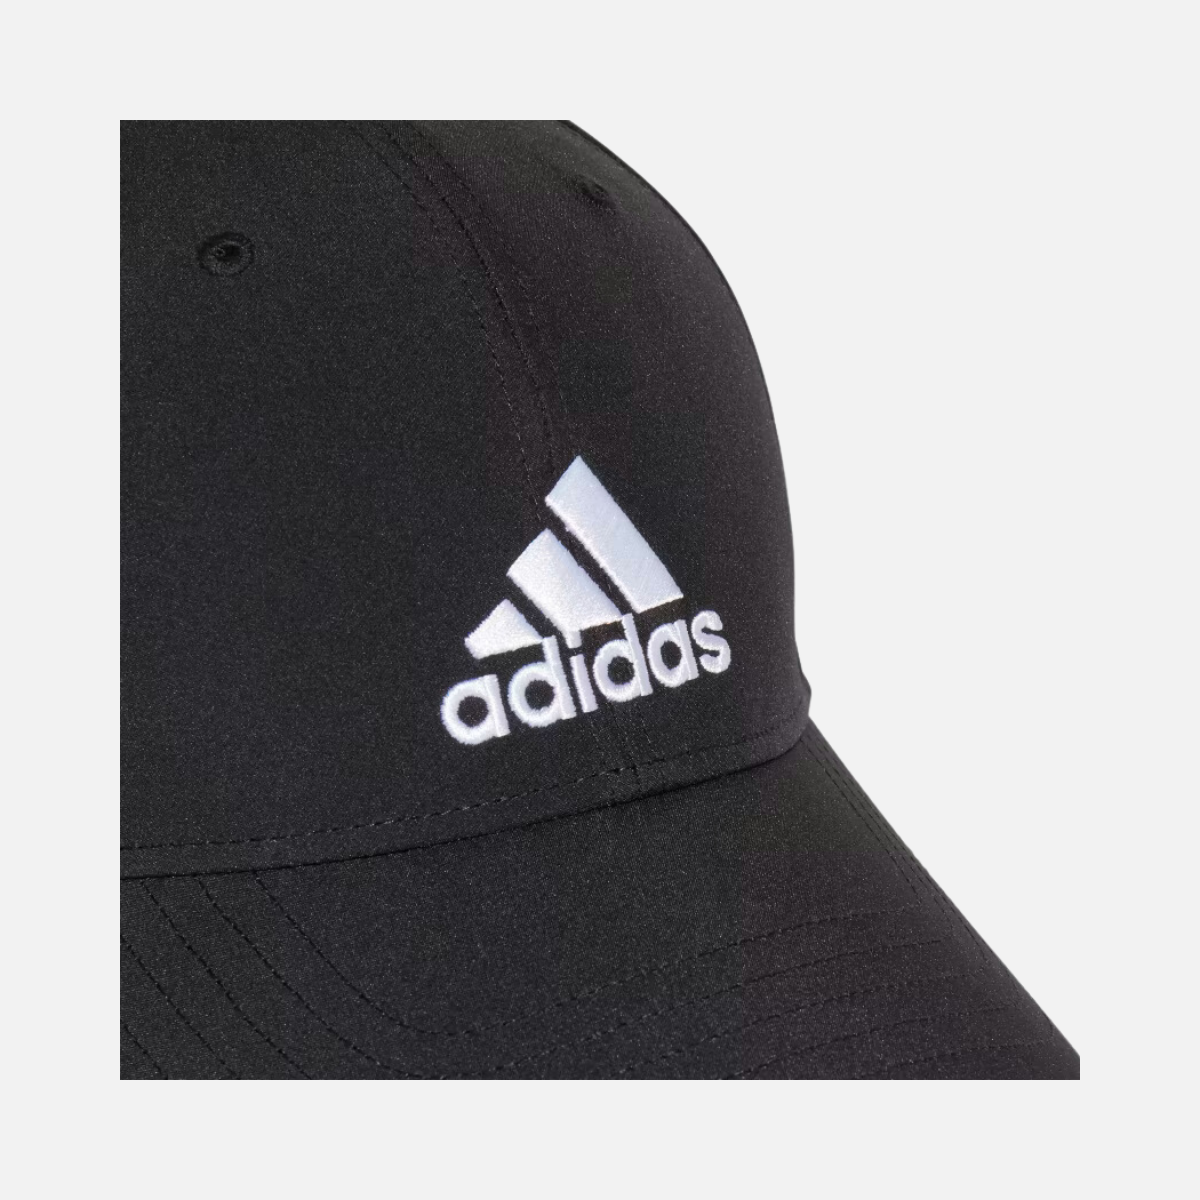 Adidas Lightweight Embroidered Kids Cap -Black/Black/White